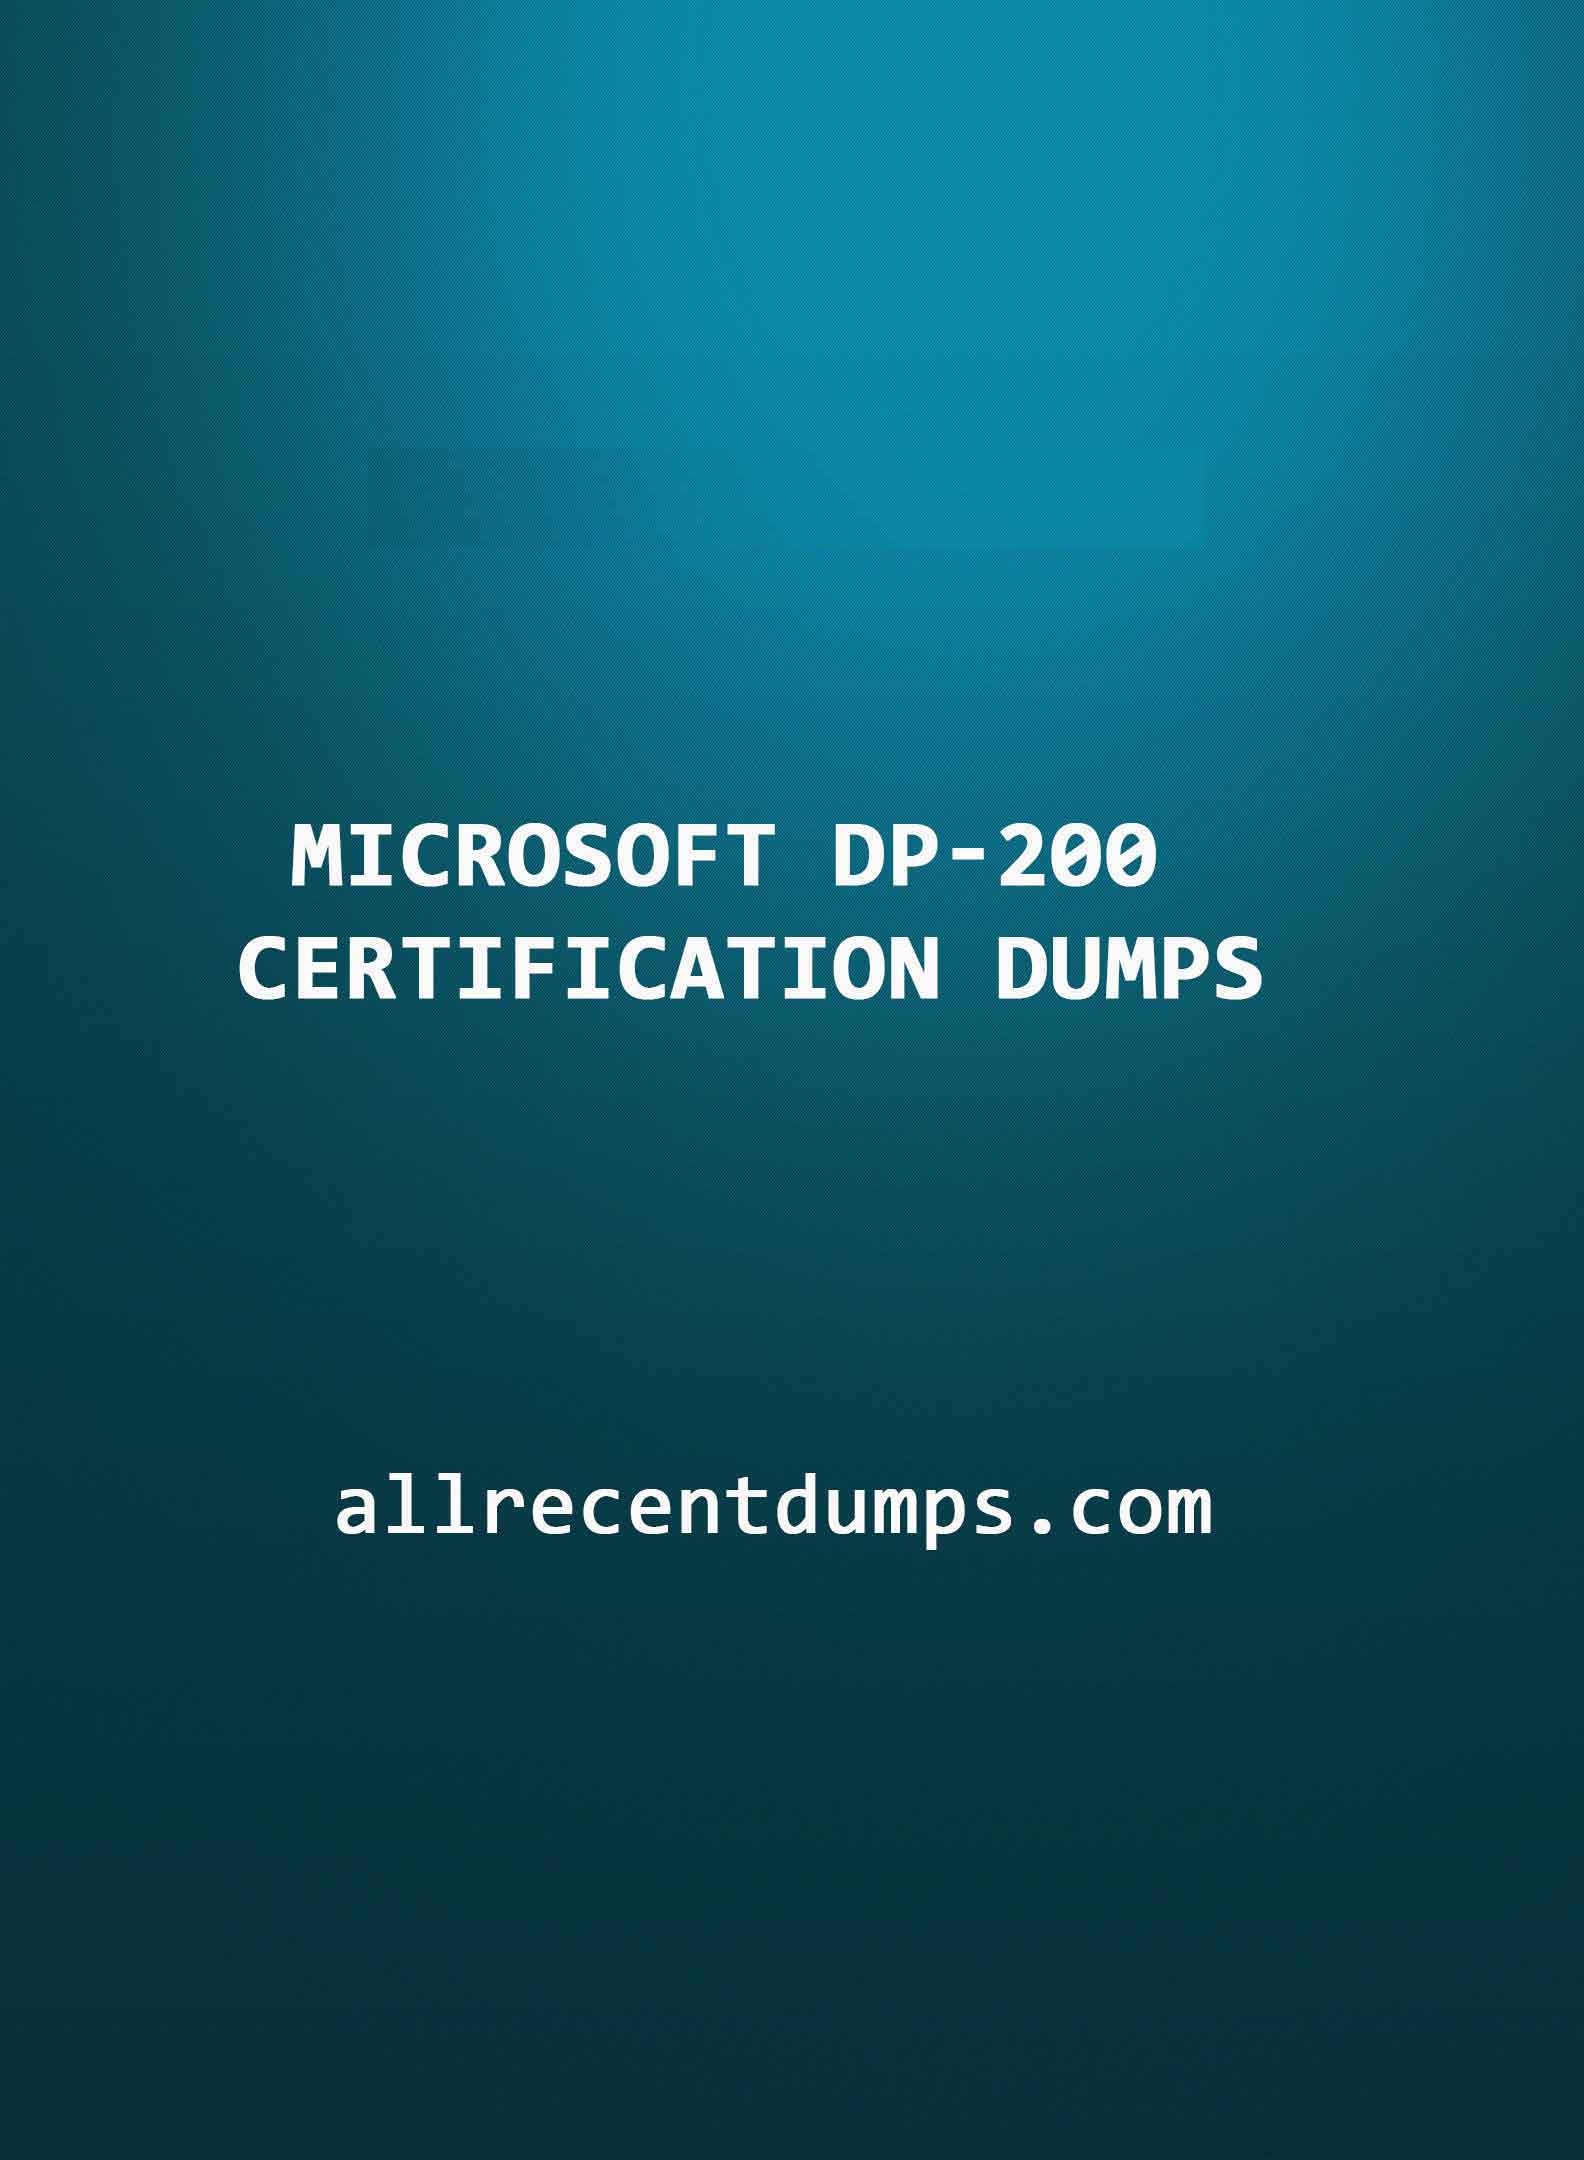 Microsoft DP-200 certification dumps